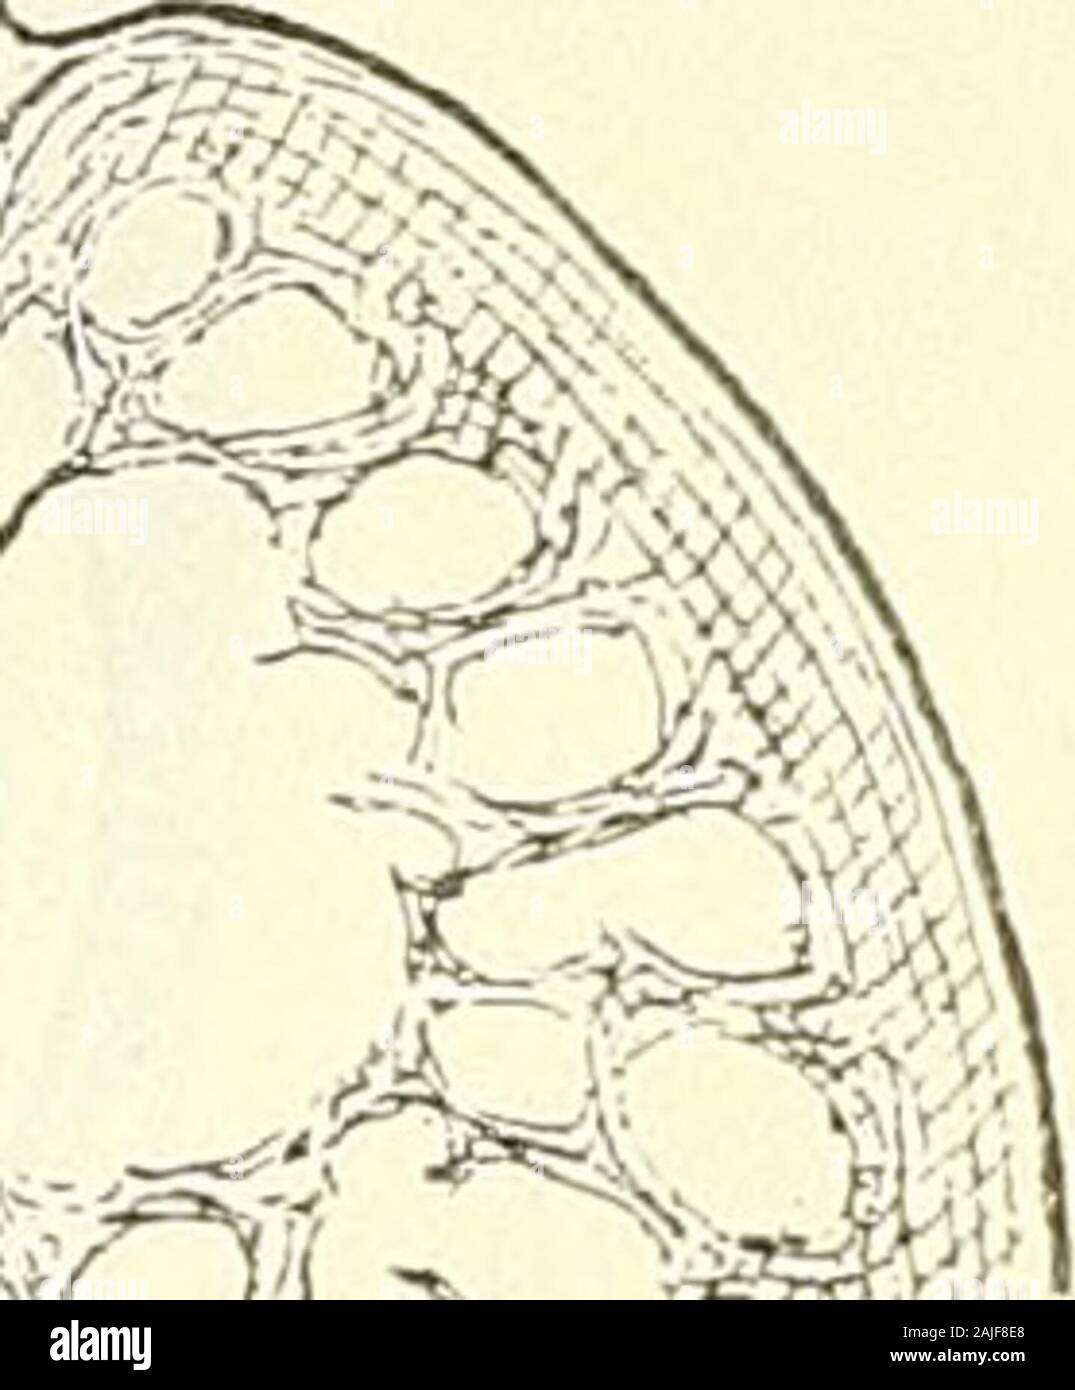 Anatomie menschlicher Embryonen . Fisr. 103. Sclinitt durca das Herz vom Embryo Q-. Vergr. 36. Oe Oesophagus, Lg Lunge, M. ppMembrana pleuro-pericardiaoa, S. r. d und S. r. s Sinus reuniens recbtes und linkes Hörn,F. E Yalv. Eust., S. int. Septum intermedium, S. inf. Sept. iuf., S. a Septum aorticum. Stock Photo